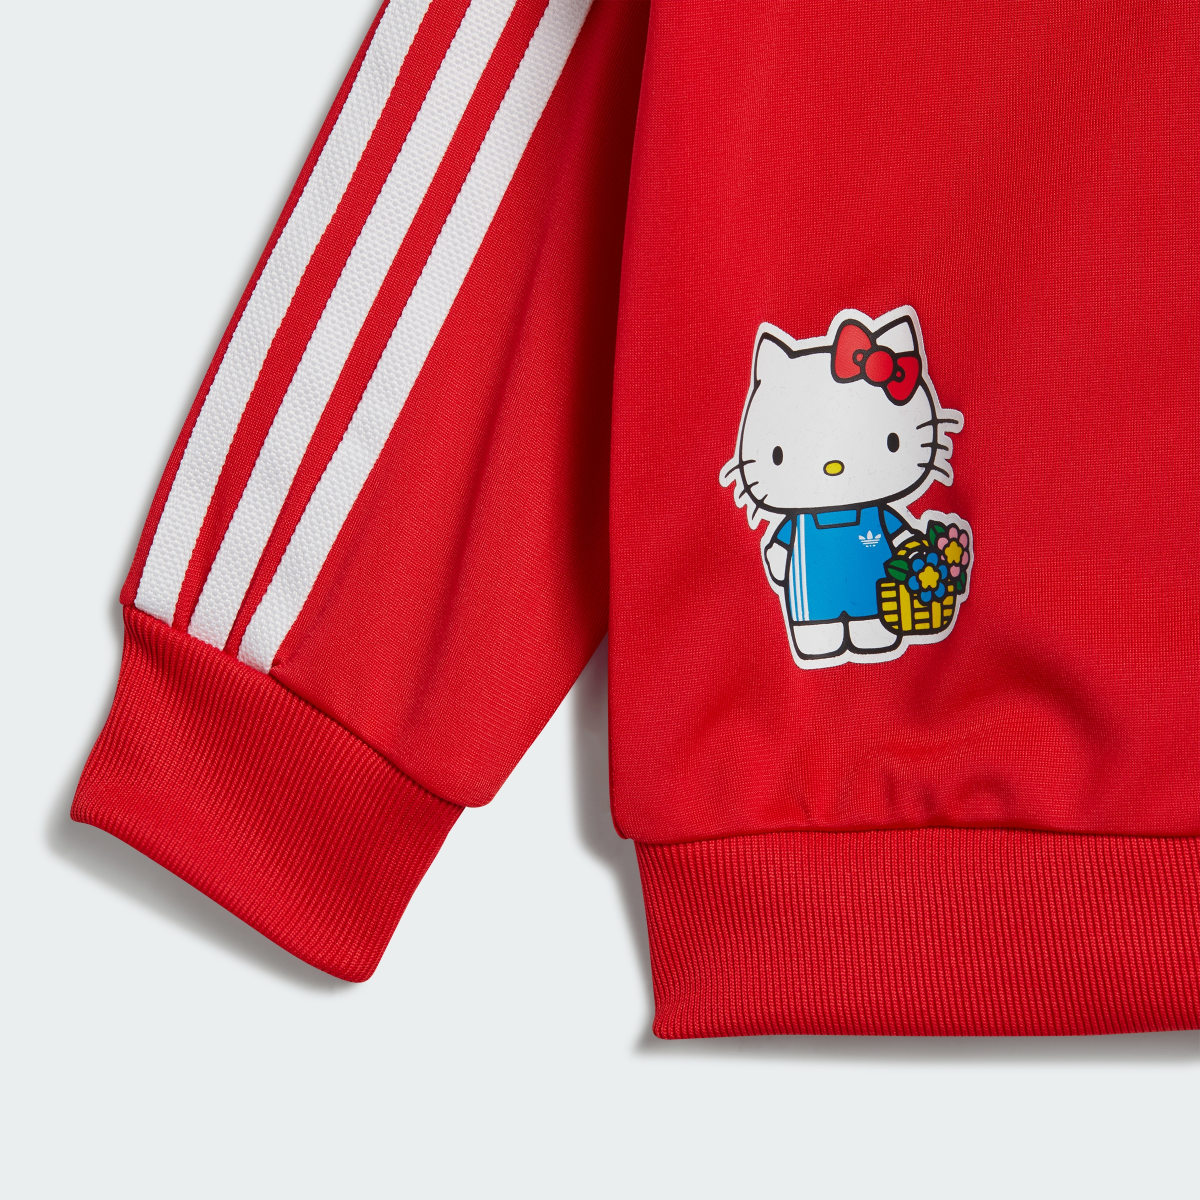 Adidas Originals x Hello Kitty SST Takım. 8